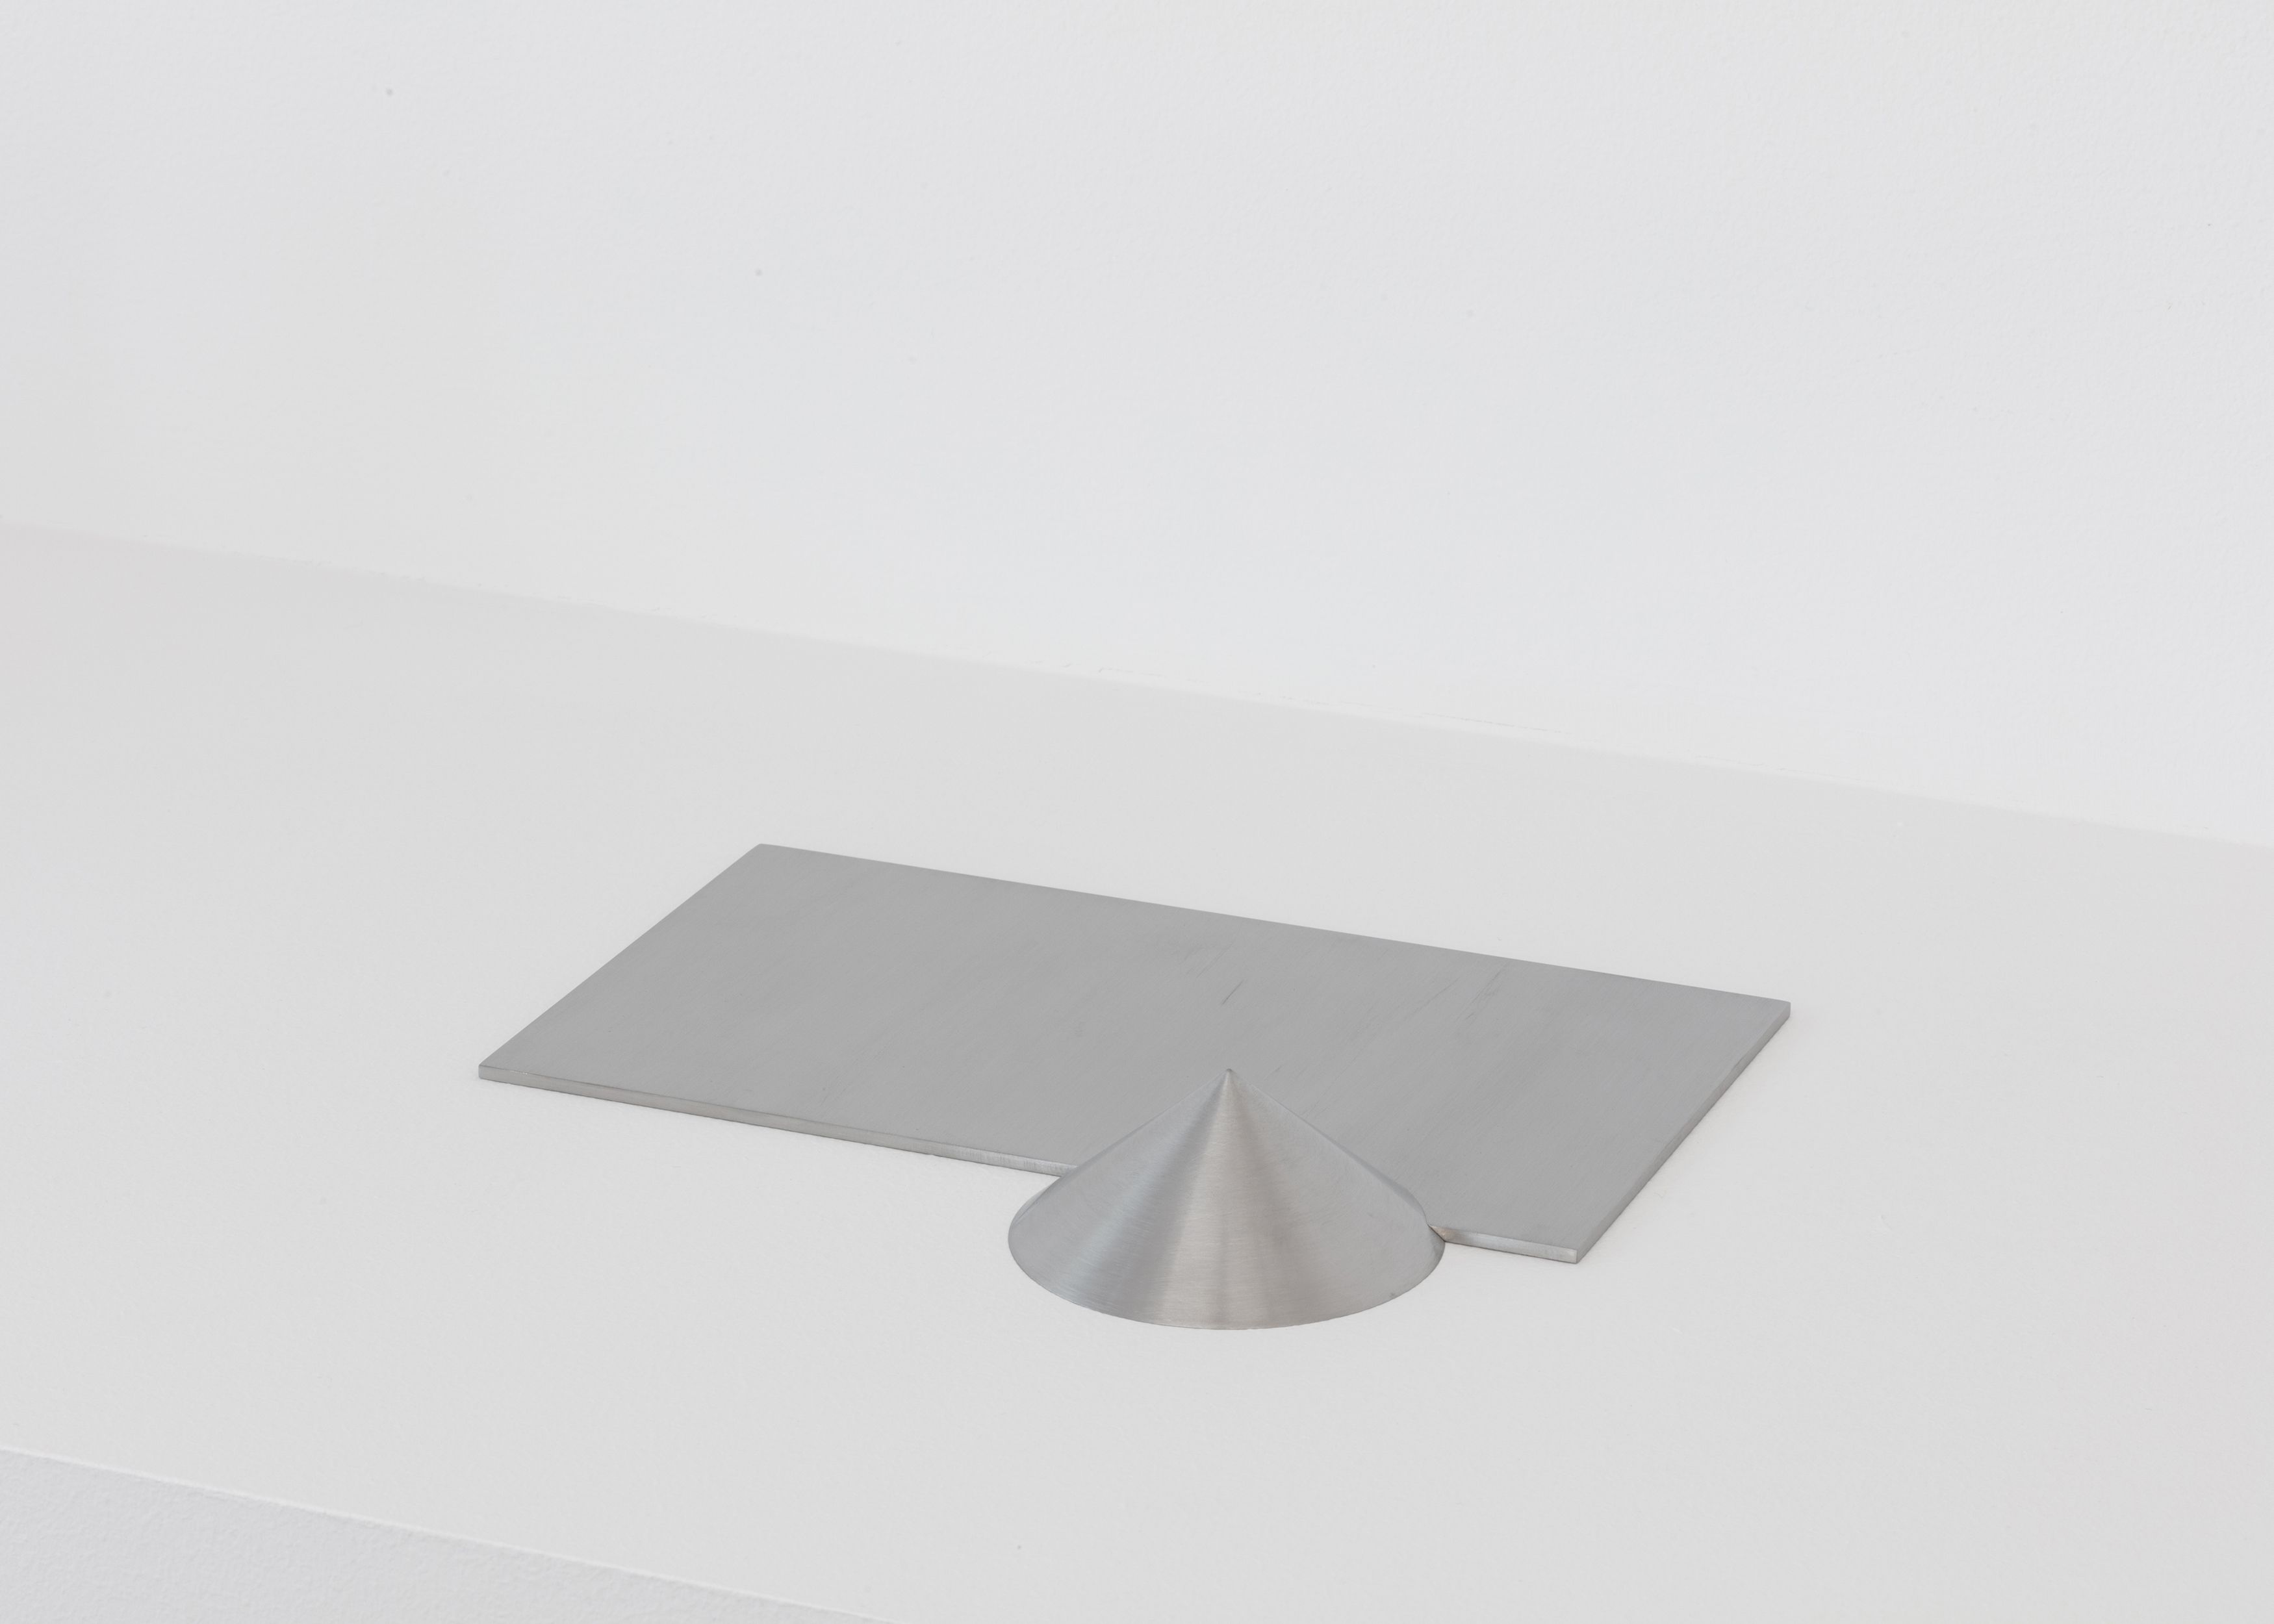 Stephen Lichty, Form 4, 2021, stainless steel, 1 x 7 x 5 1/2 in. (2.54 x 17.78 x 13.97 cm)